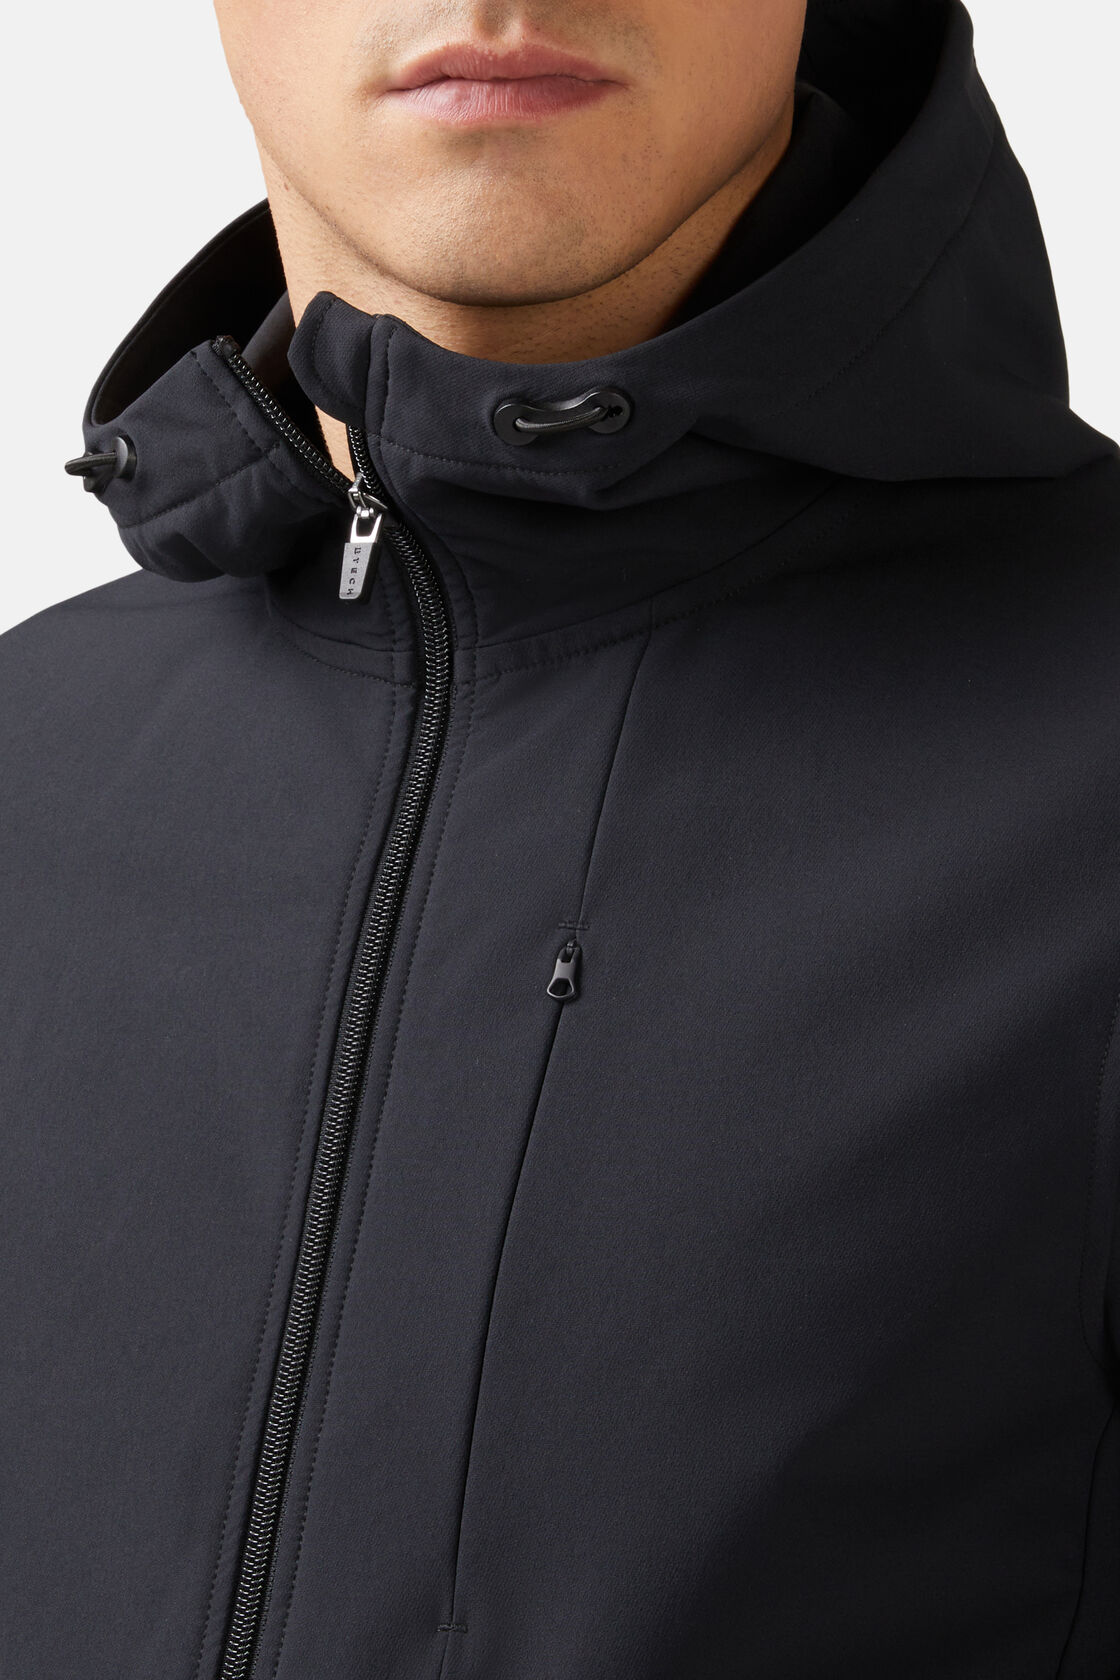 Windproof Jacket in B-Tech Stretch Nylon, Black, hi-res